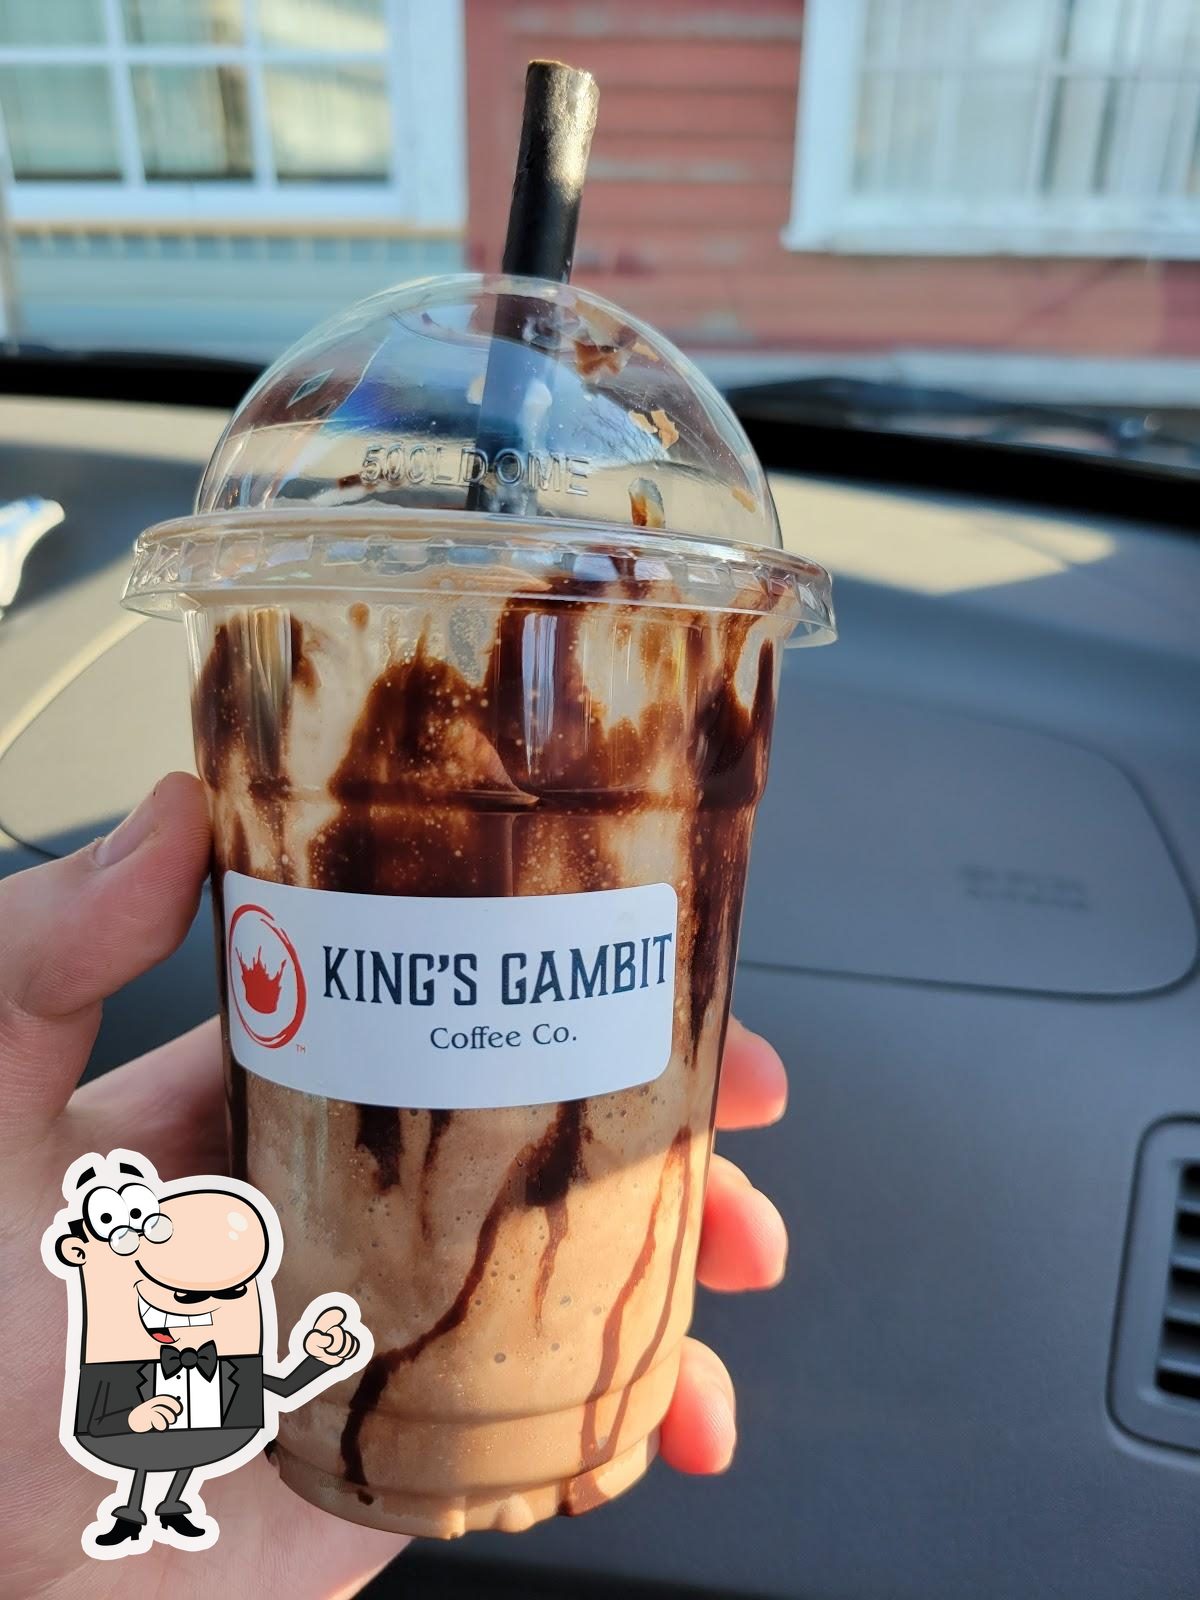 King's Gambit Coffee Co.